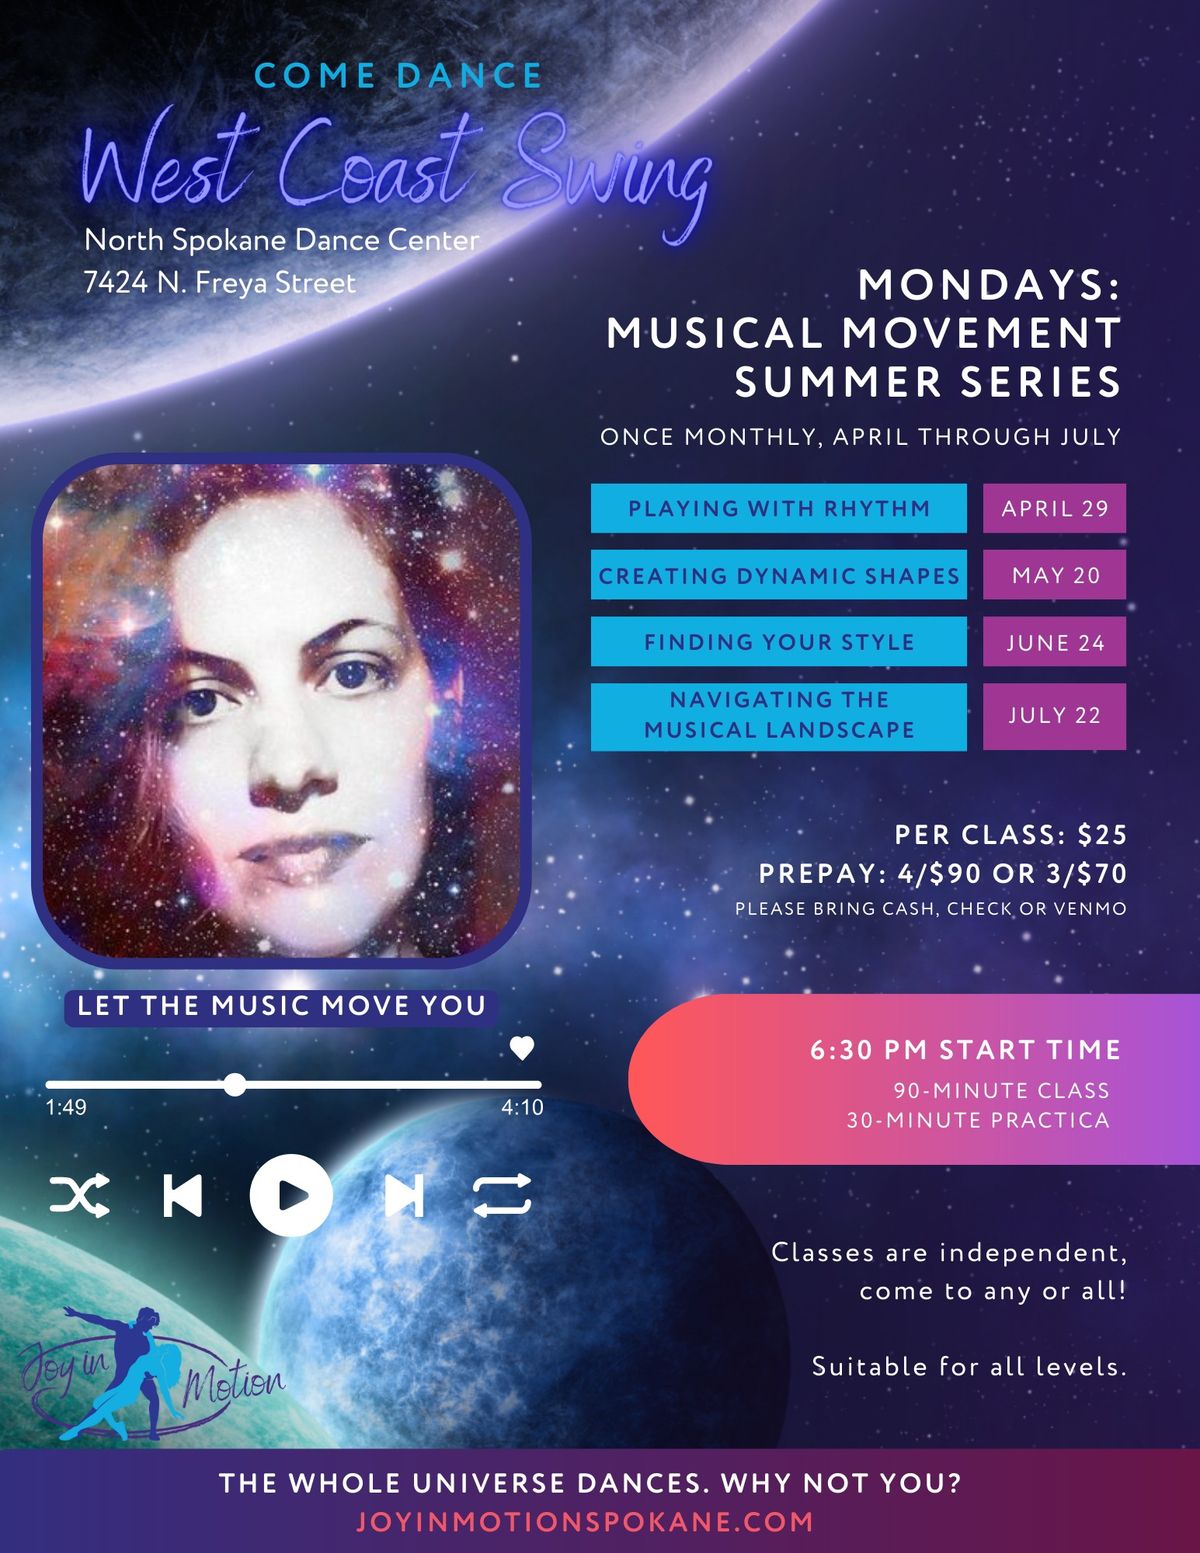 Musical Movement Summer Series: Class 4 - Navigating the Musical Landscape